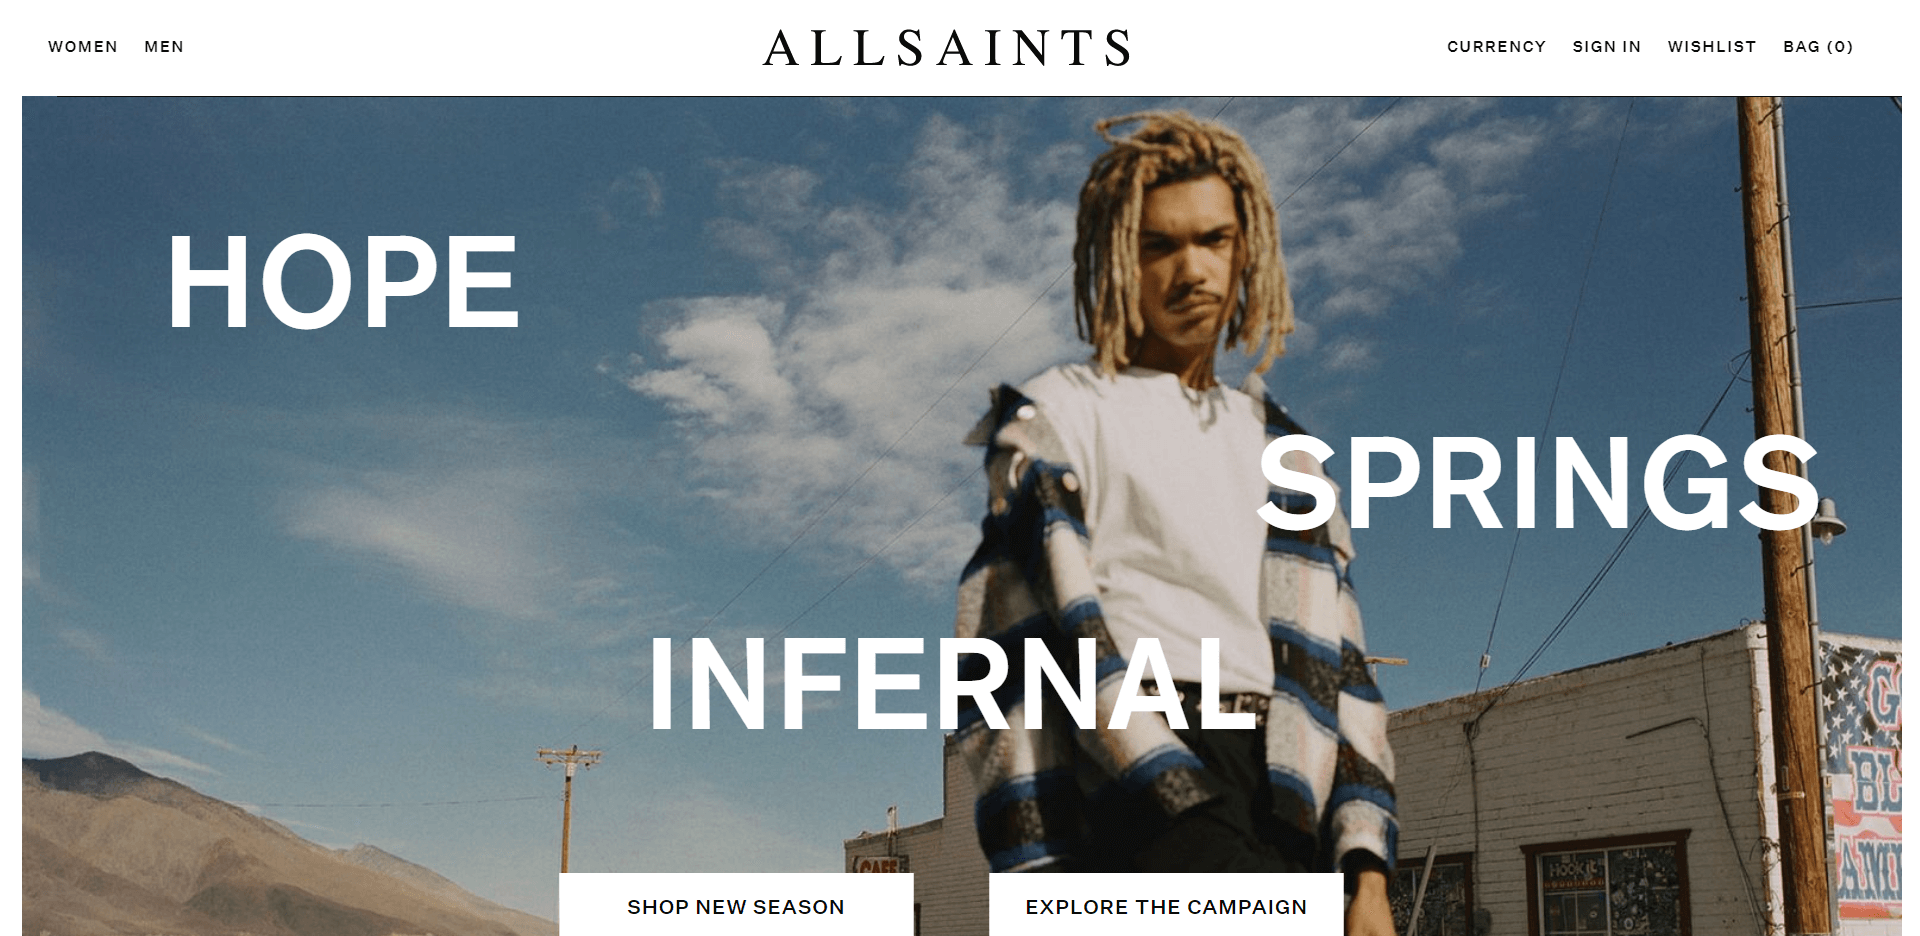 An artistic layout communicating AllSaint's alternative, artistic brand identity.